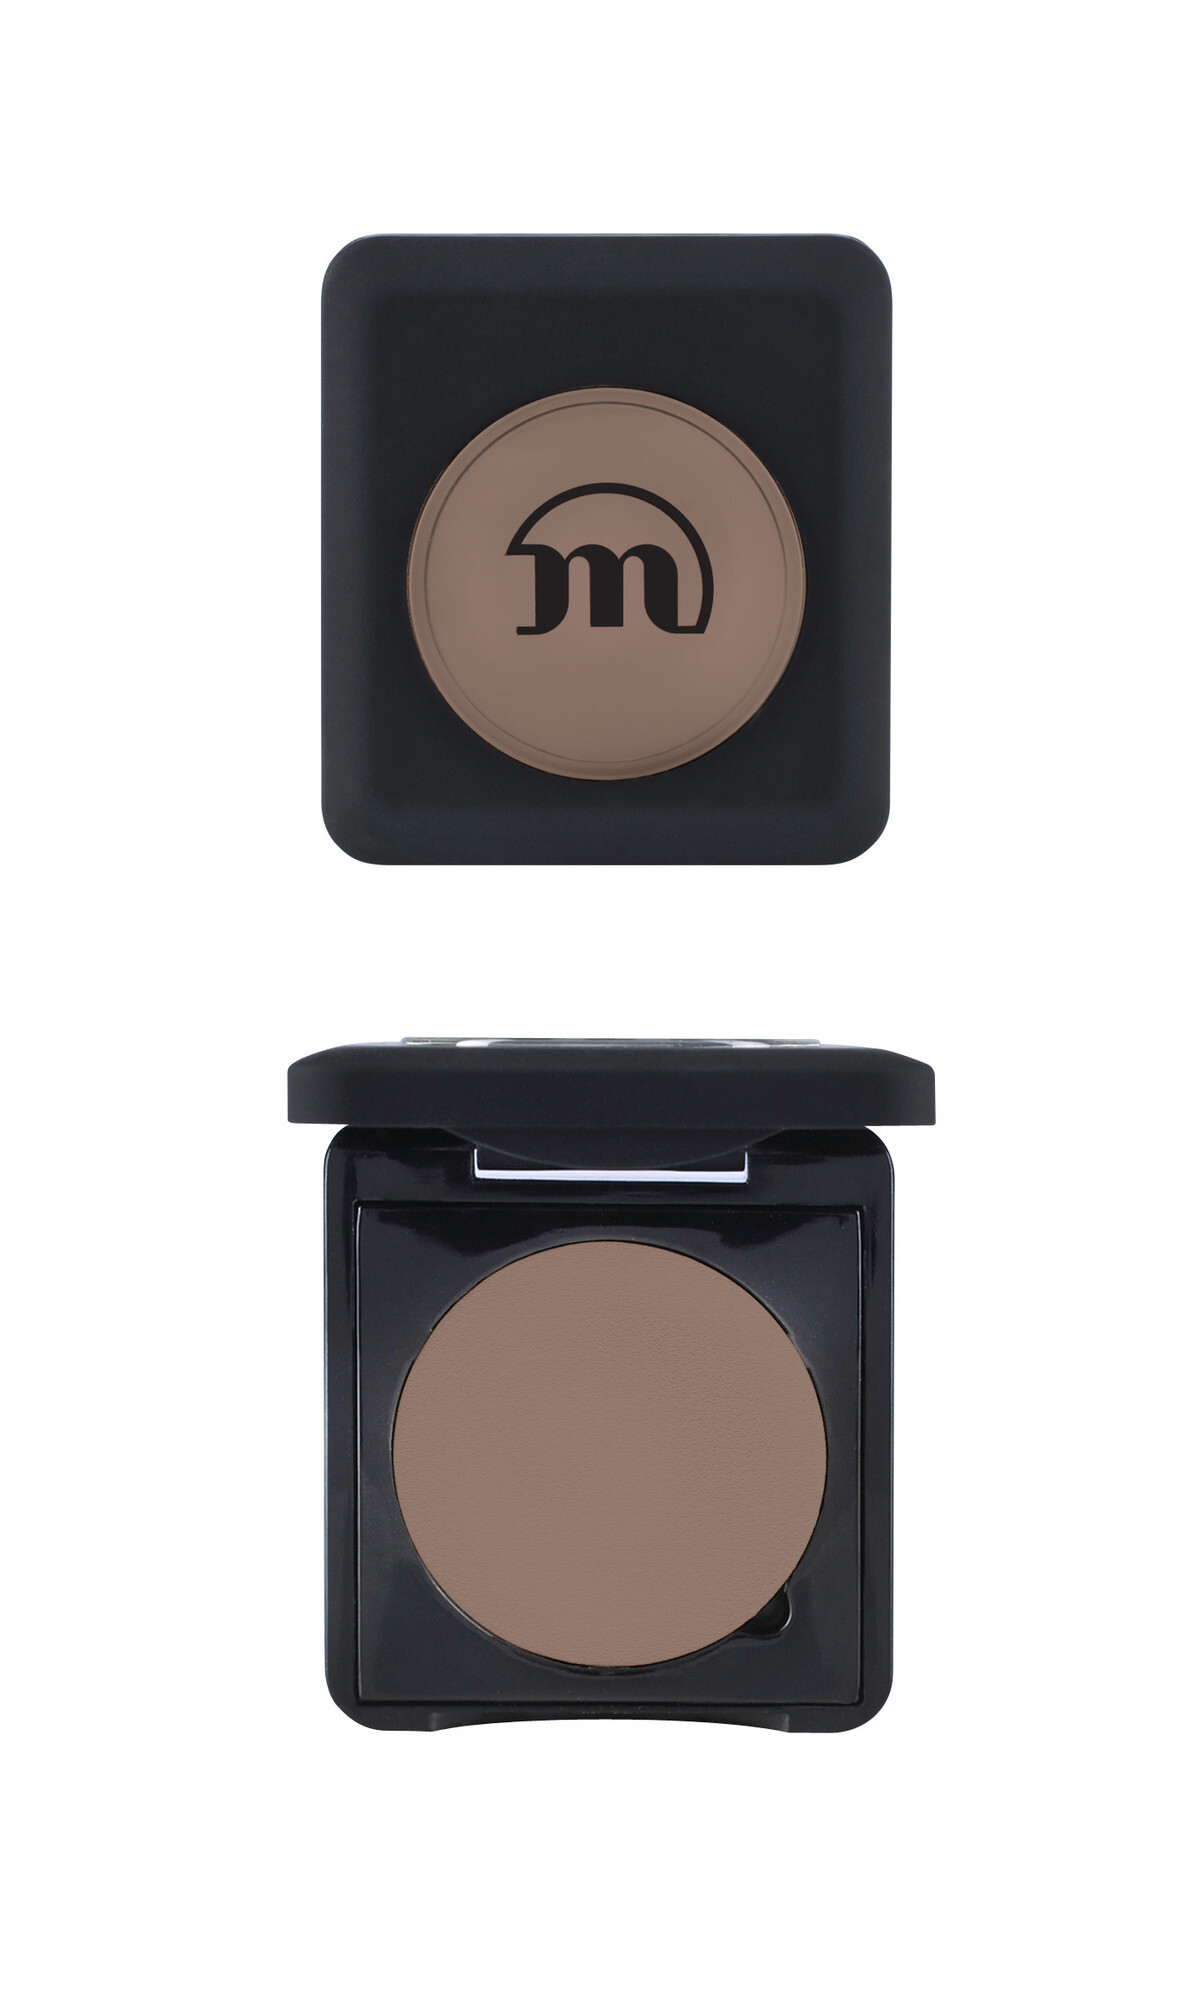 Make-up Studio Eyeshadow in Box Type B 201 B 201